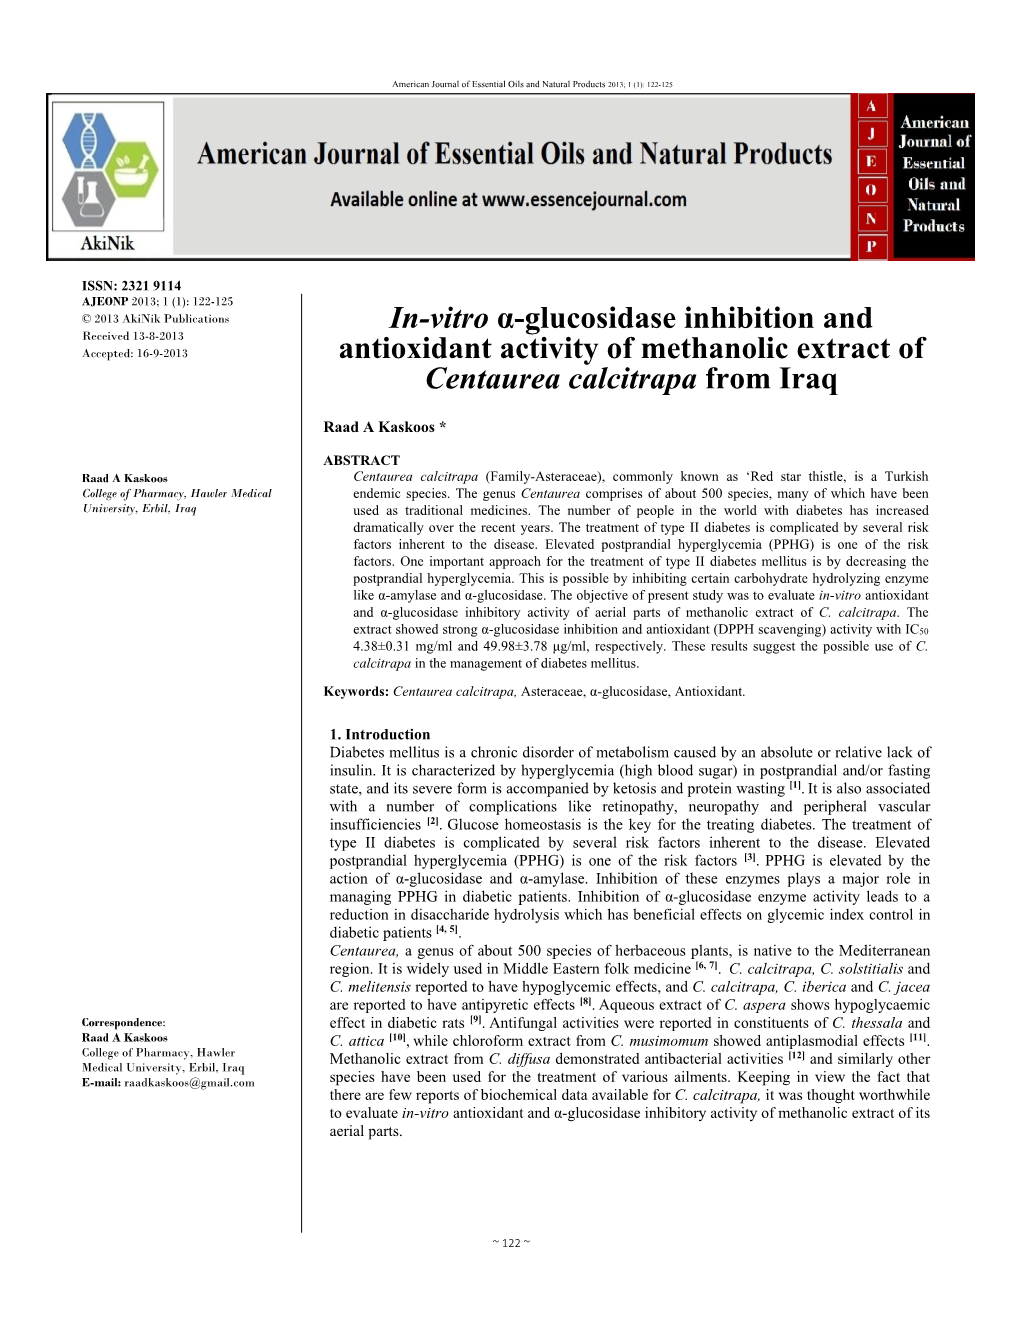 In-Vitro Α-Glucosidase Inhibition and Antioxidant Activity of Methanolic Extract of Centaurea Calcitrapa from Iraq